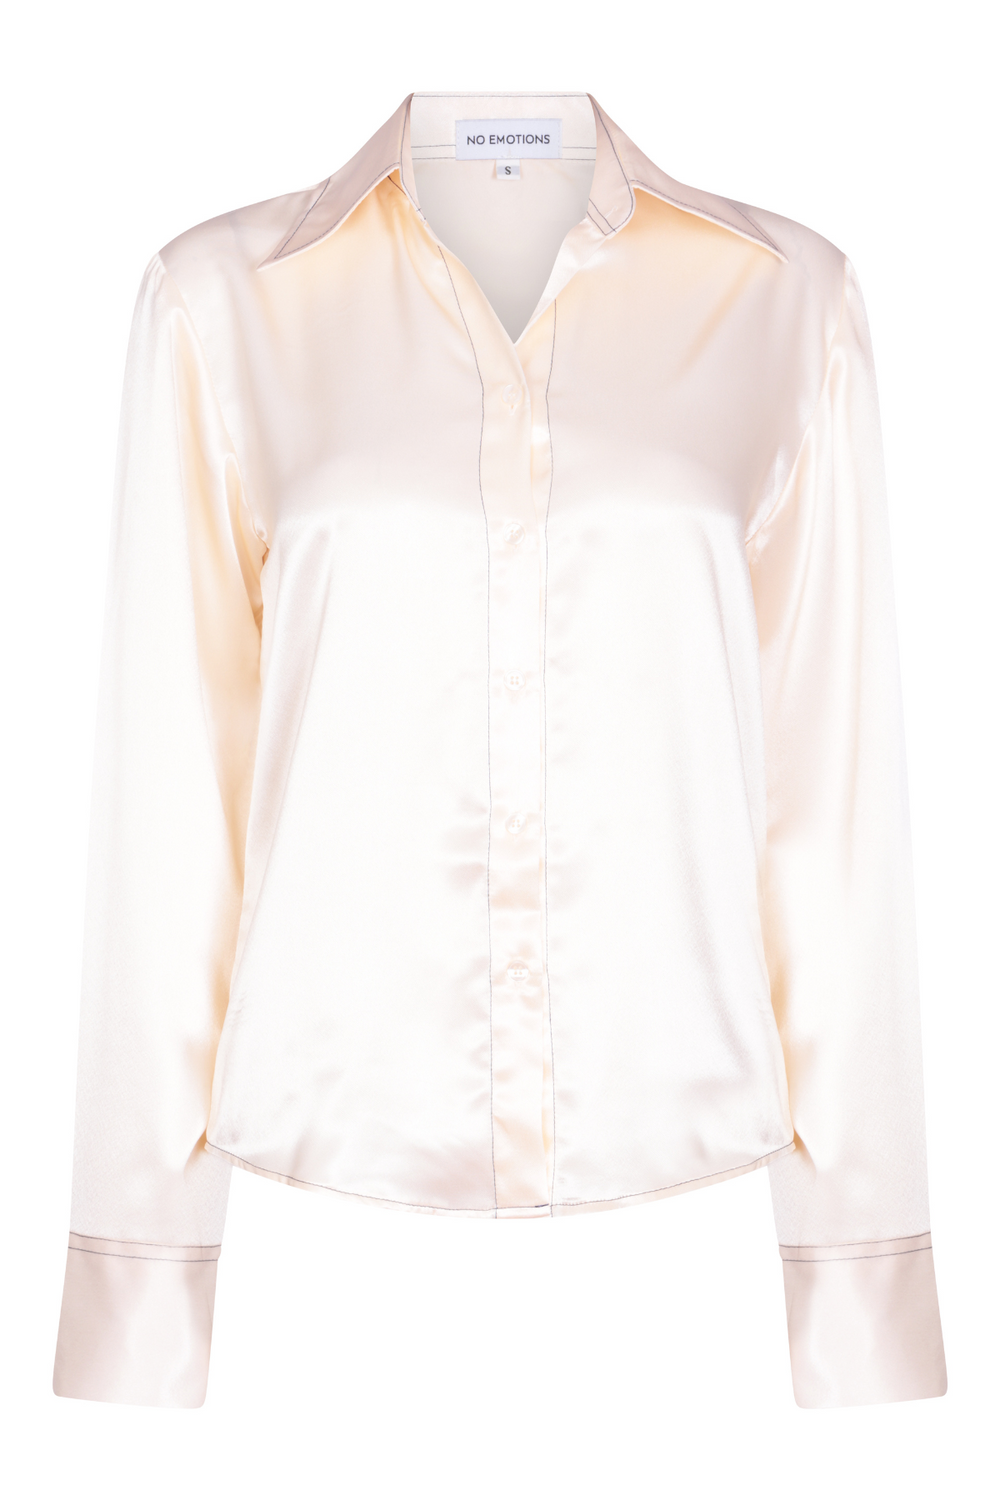 cream silk shirt with statement cuffs and collar. navy contrast stitching